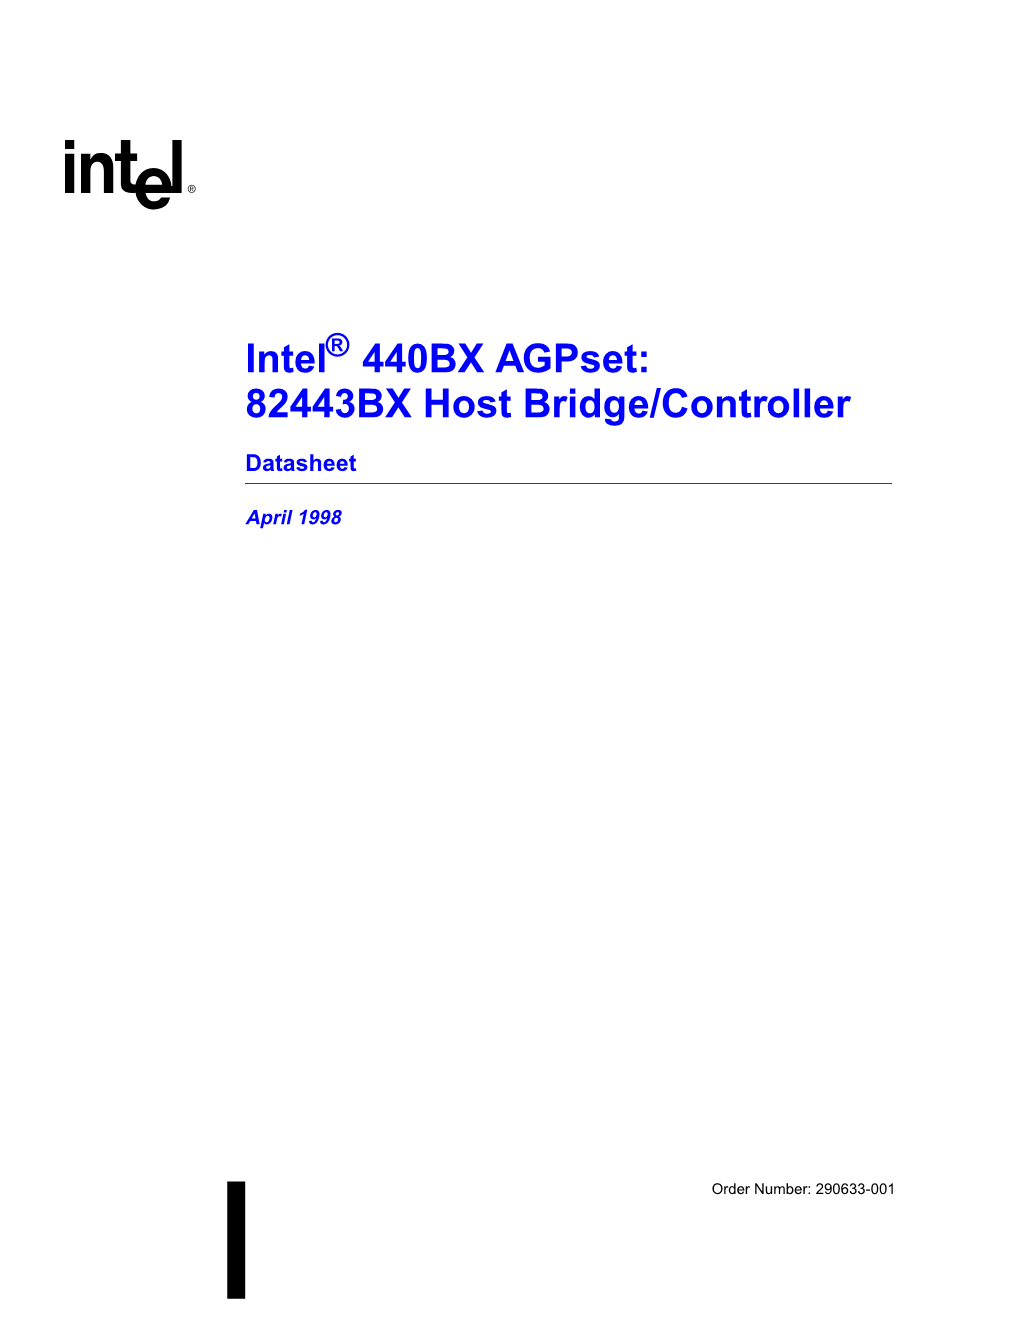 Intel 440BX Agpset